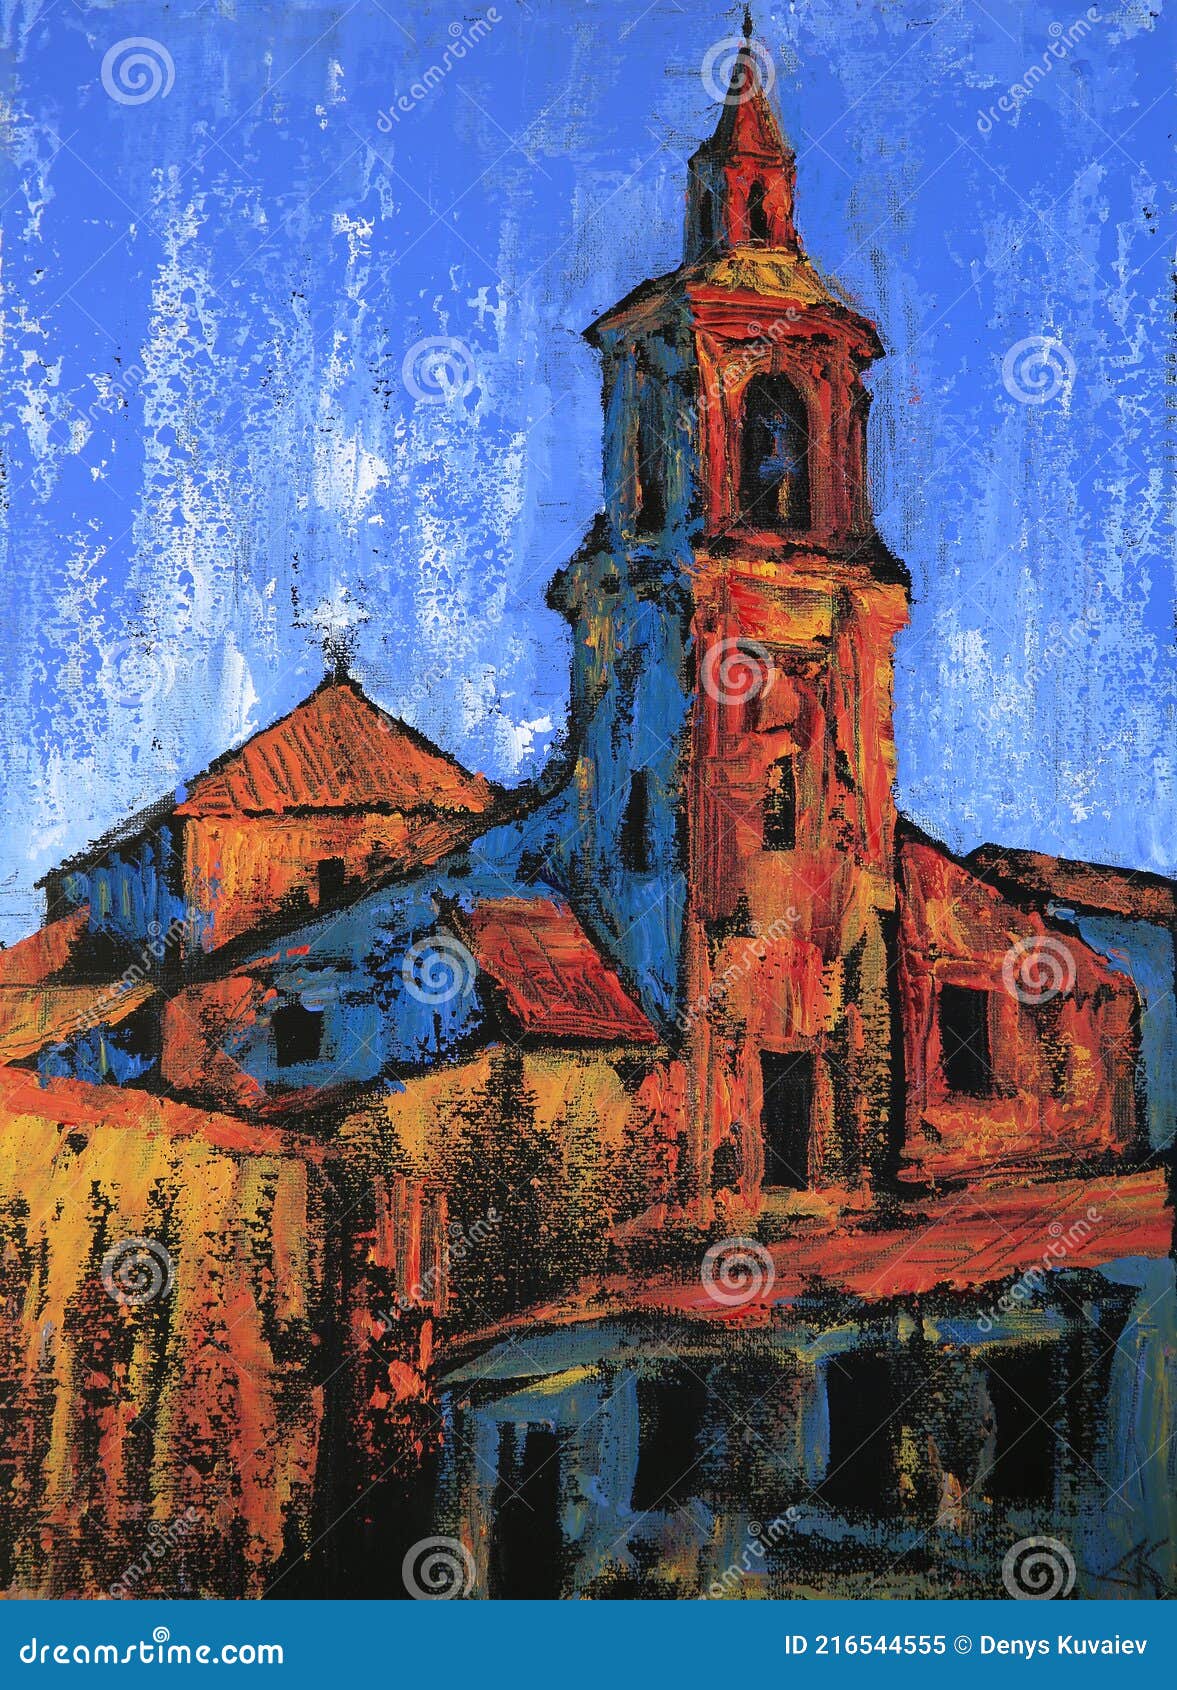 art painting of the iglesia parroquial de san pedro apstolo in alba de tormes city, spain